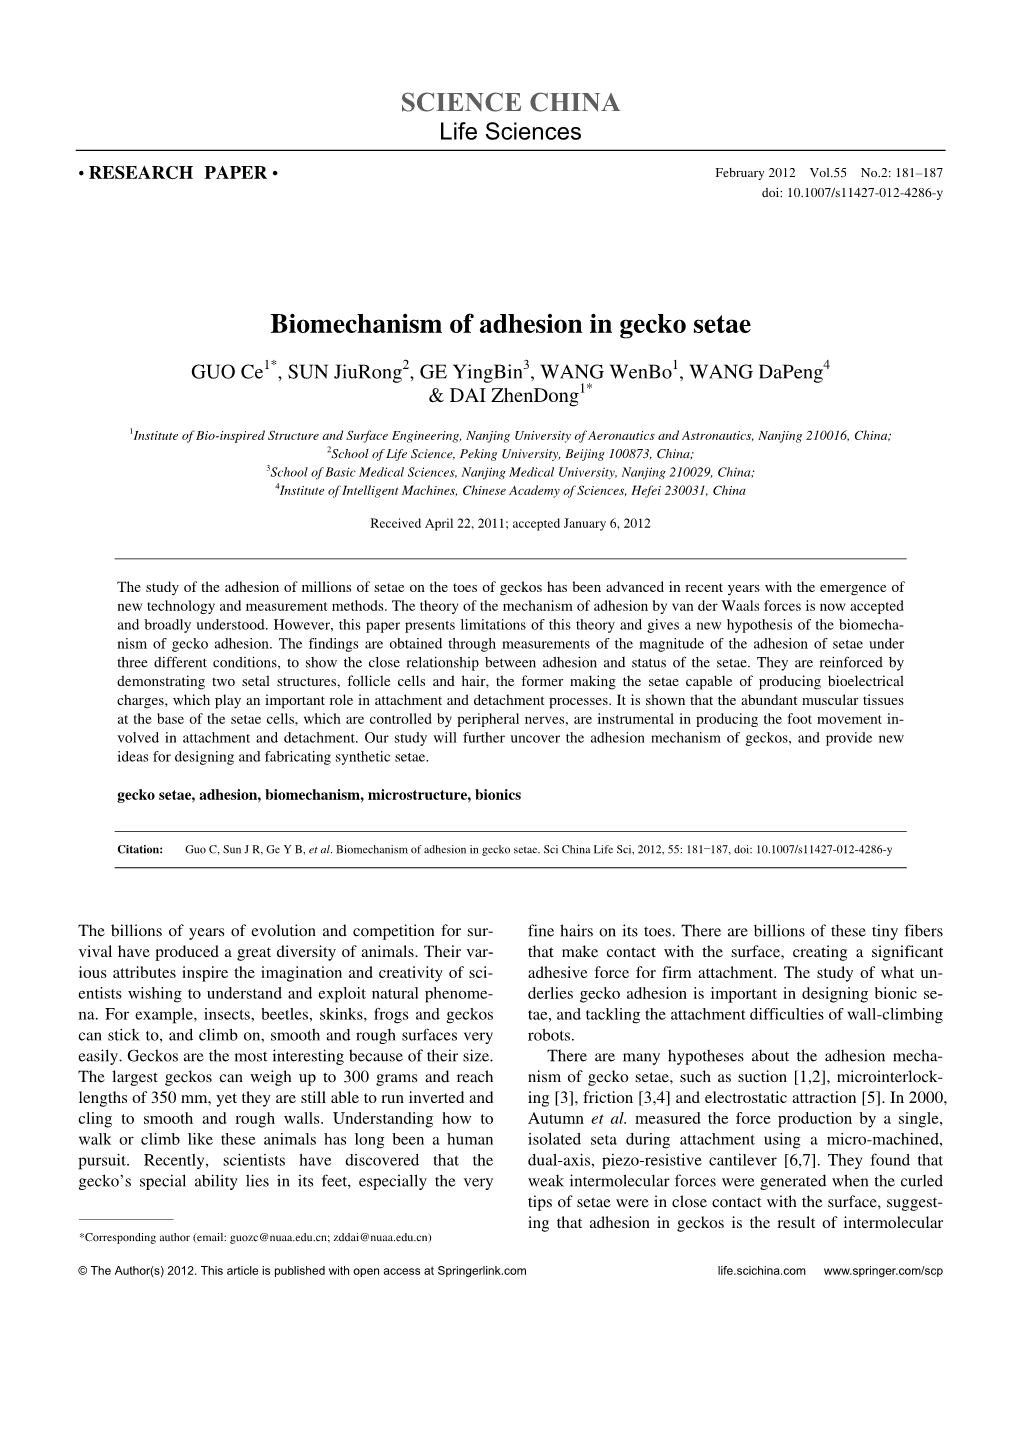 SCIENCE CHINA Biomechanism of Adhesion in Gecko Setae